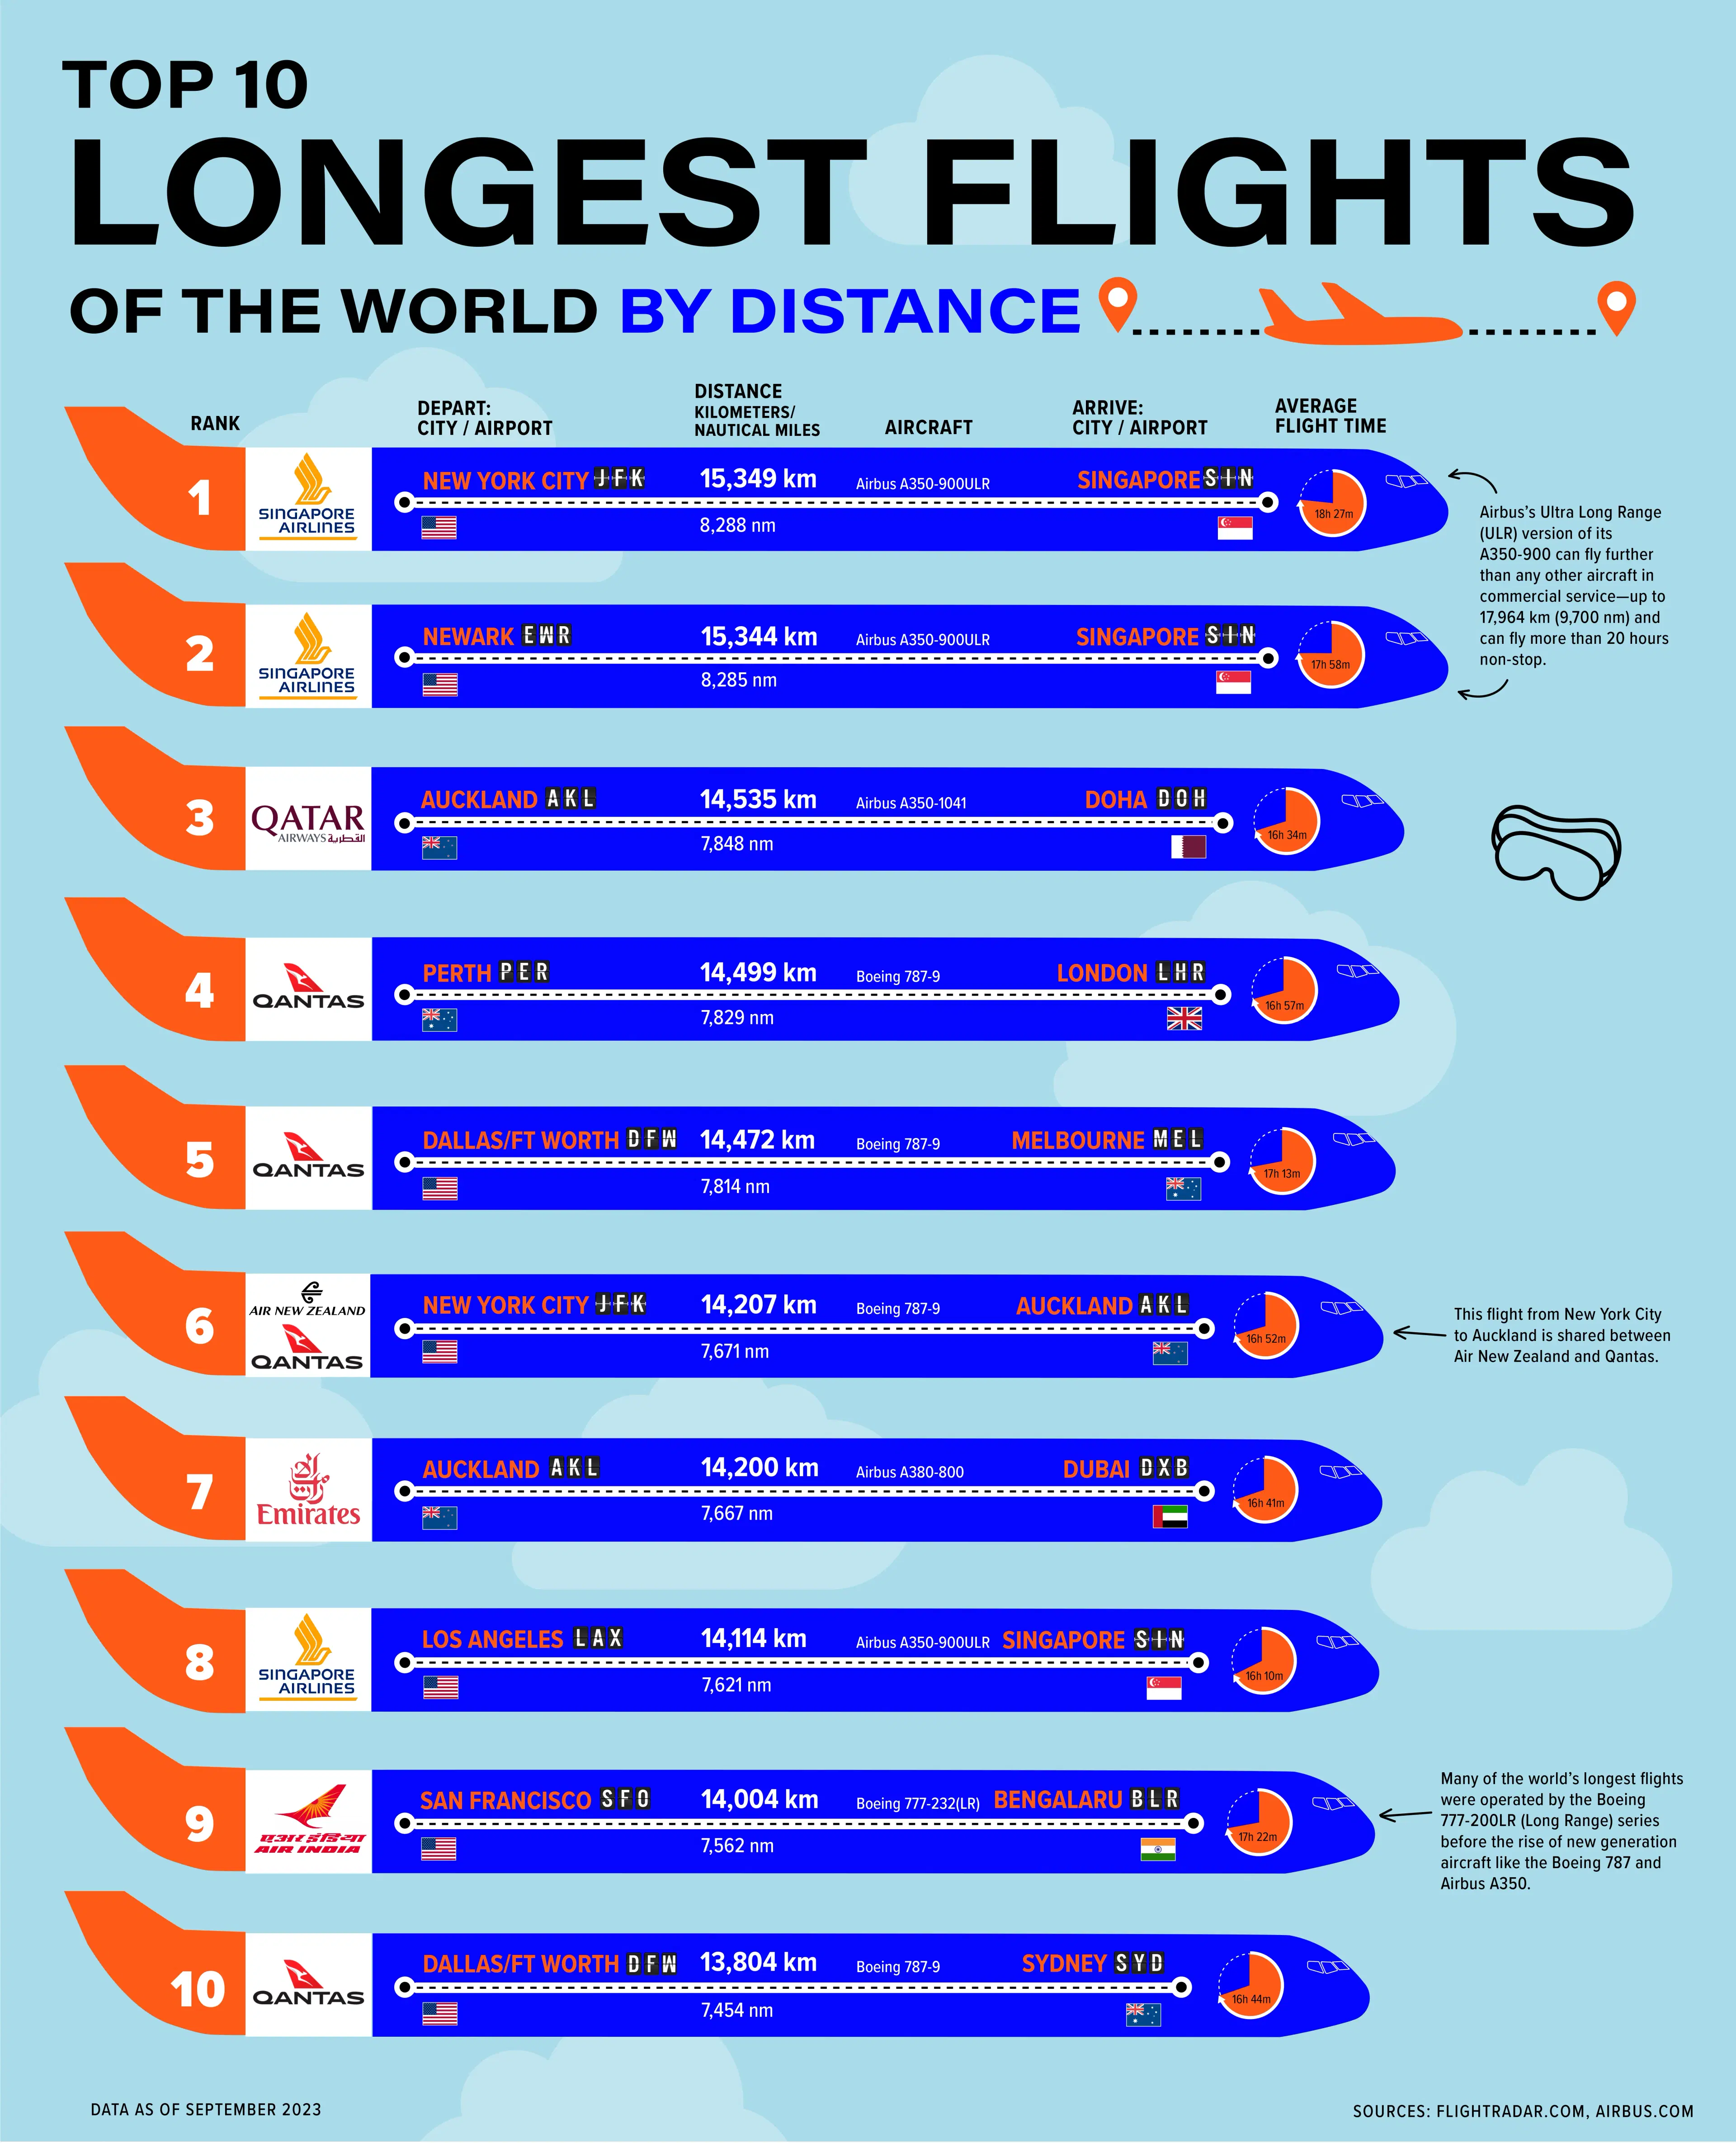 Longest Flights of the World